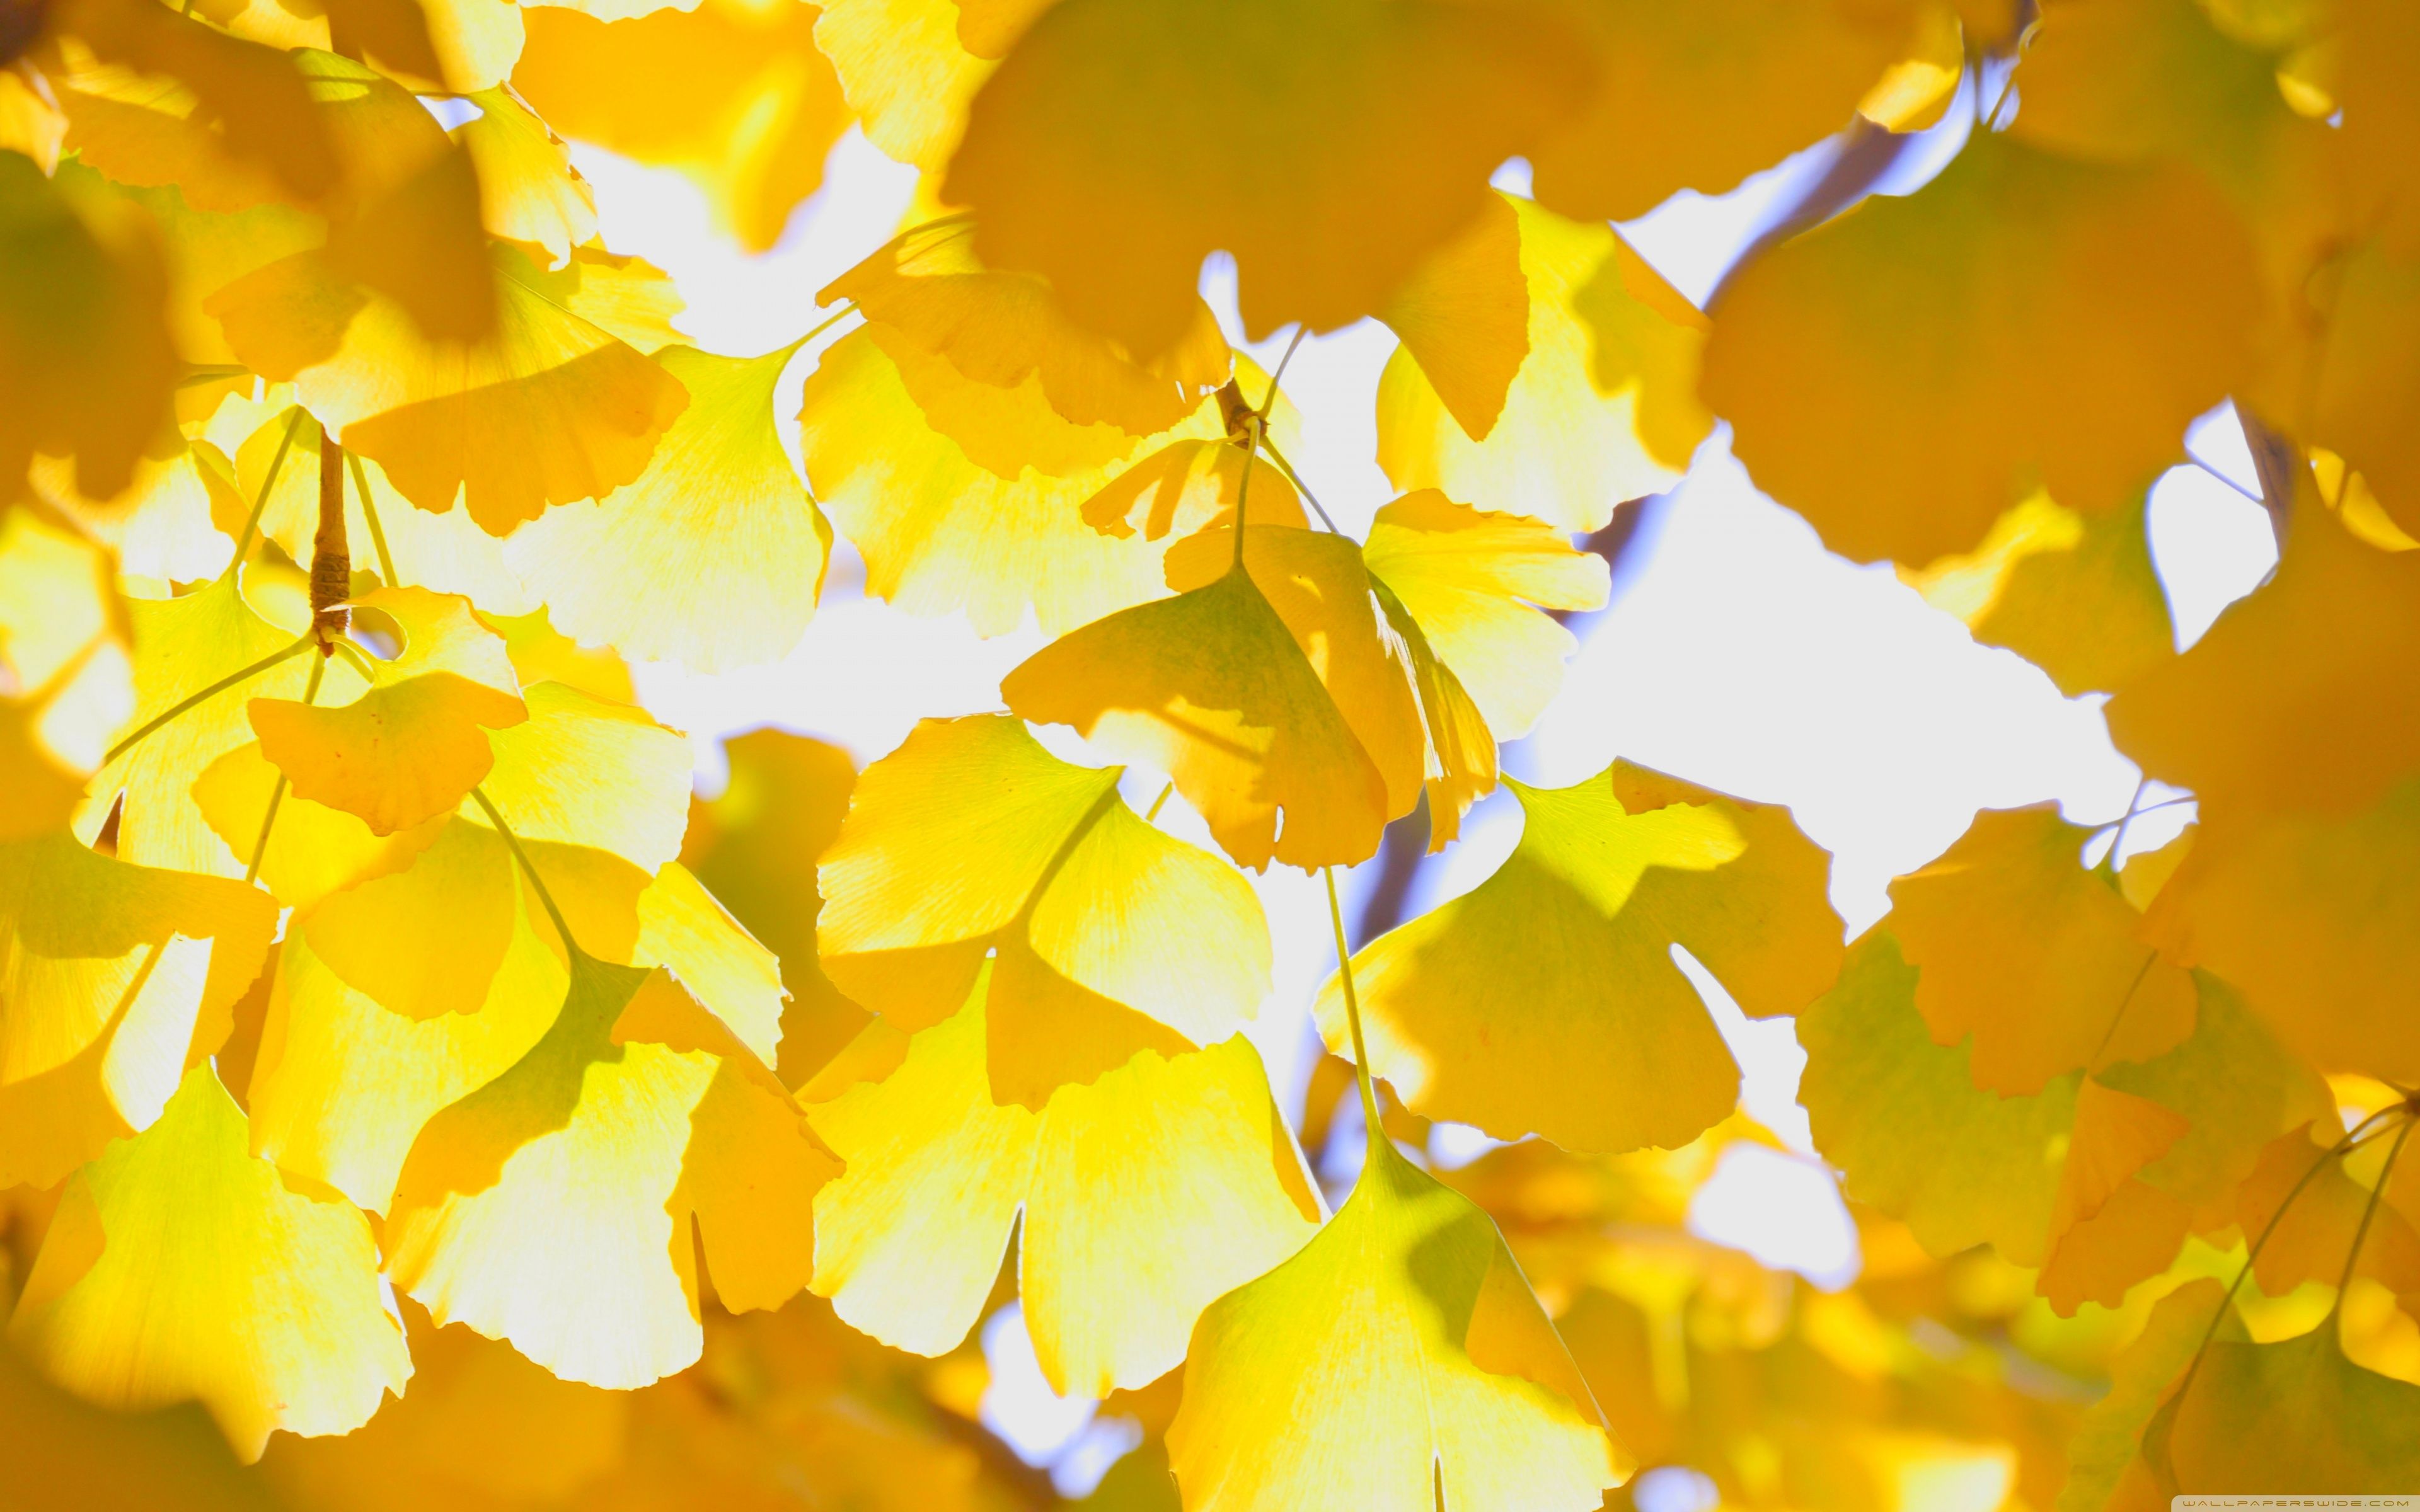 Yellow Autumn Leaves Ultra HD Desktop Background Wallpaper for 4K UHD TV, Widescreen & UltraWide Desktop & Laptop, Multi Display, Dual Monitor, Tablet